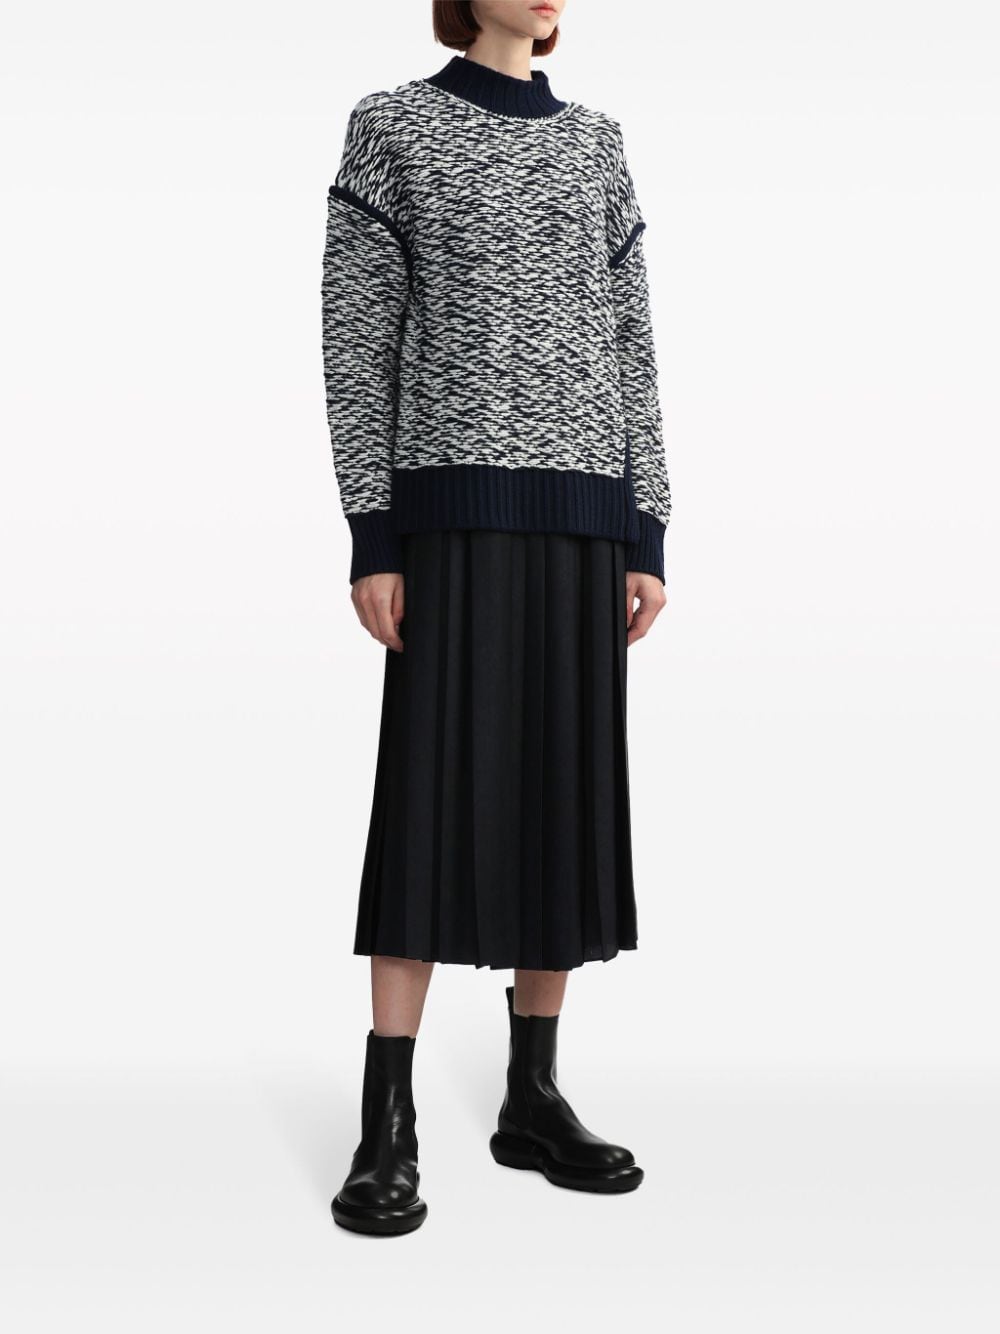 Image 2 of 3.1 Phillip Lim high-neck jacquard wool jumper